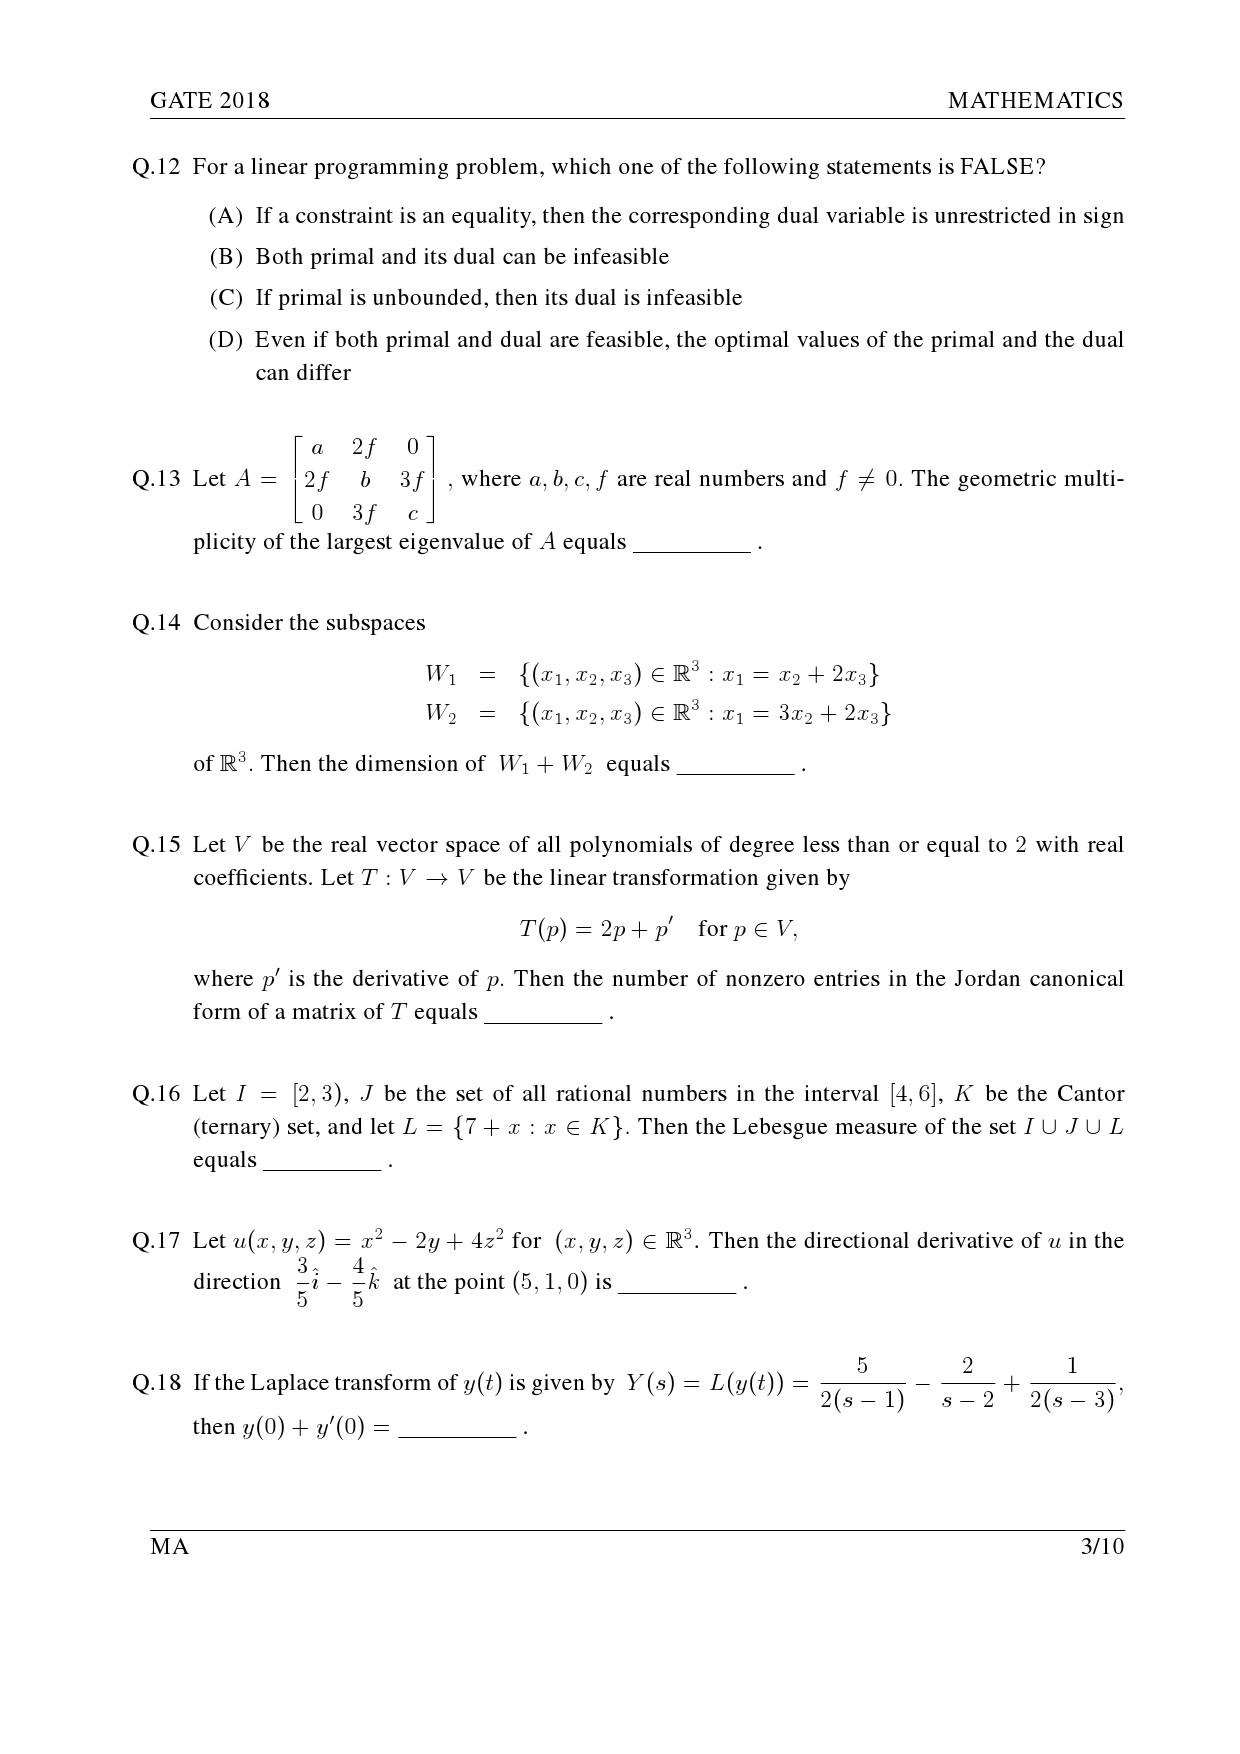 GATE Exam Question Paper 2018 Mathematics 6